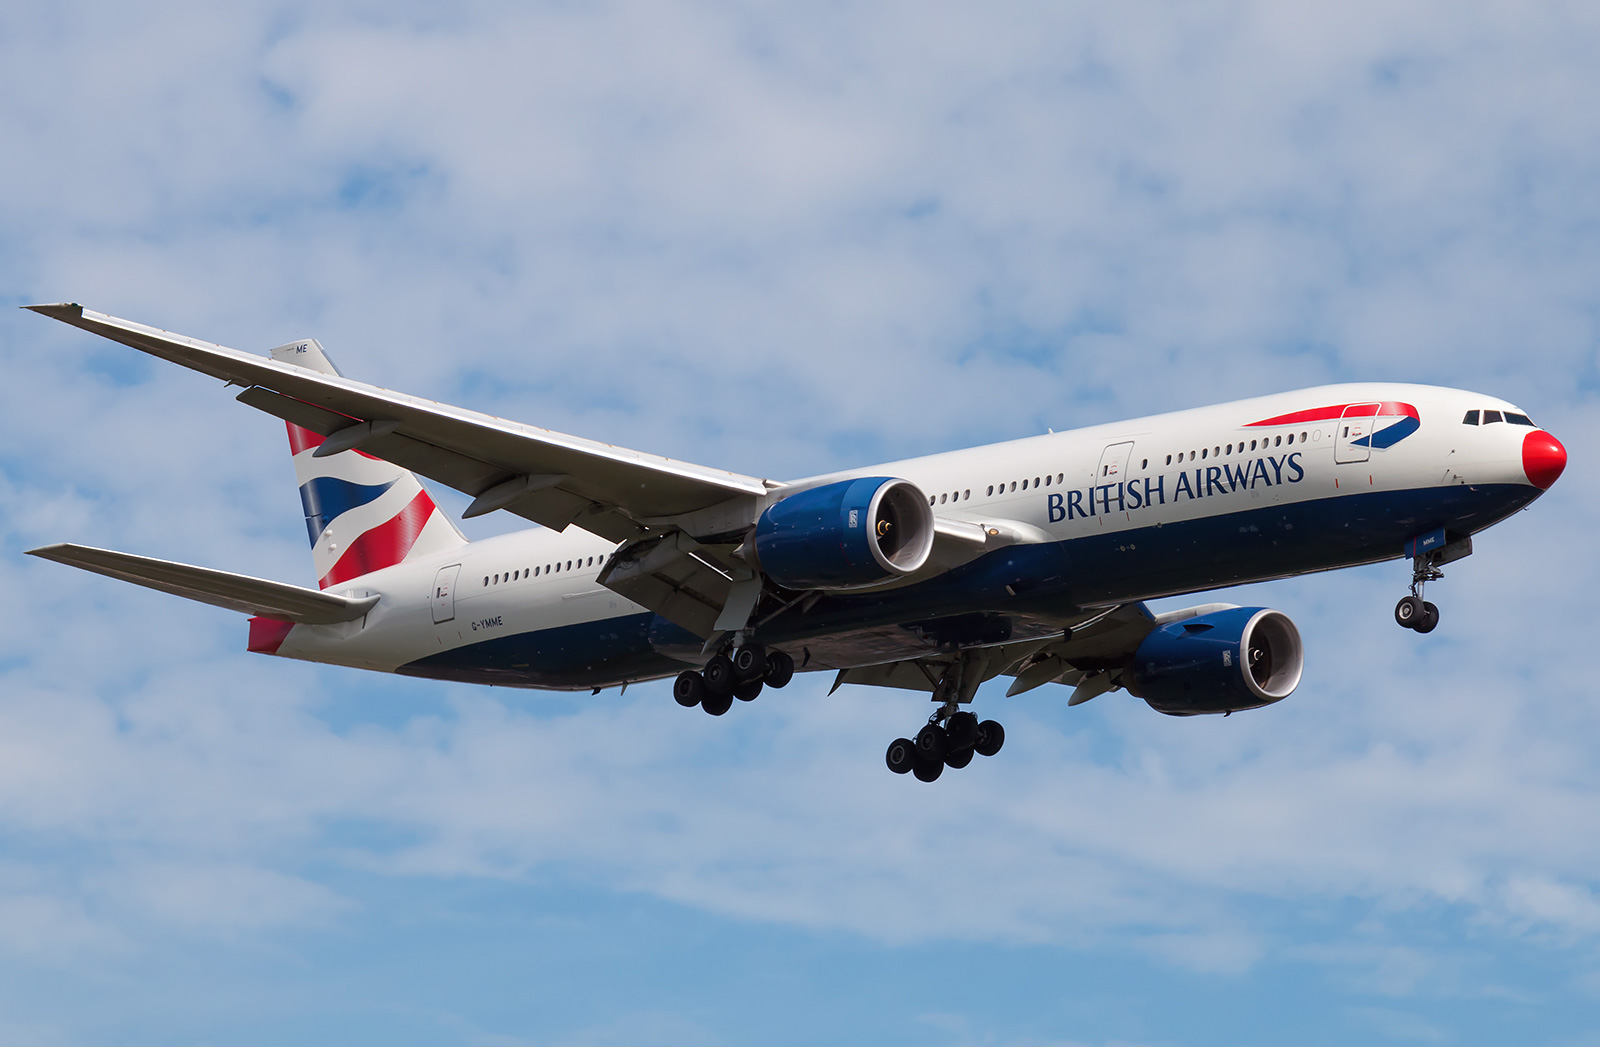 Boeing 777-200 British Airways. Photos and description of the plane